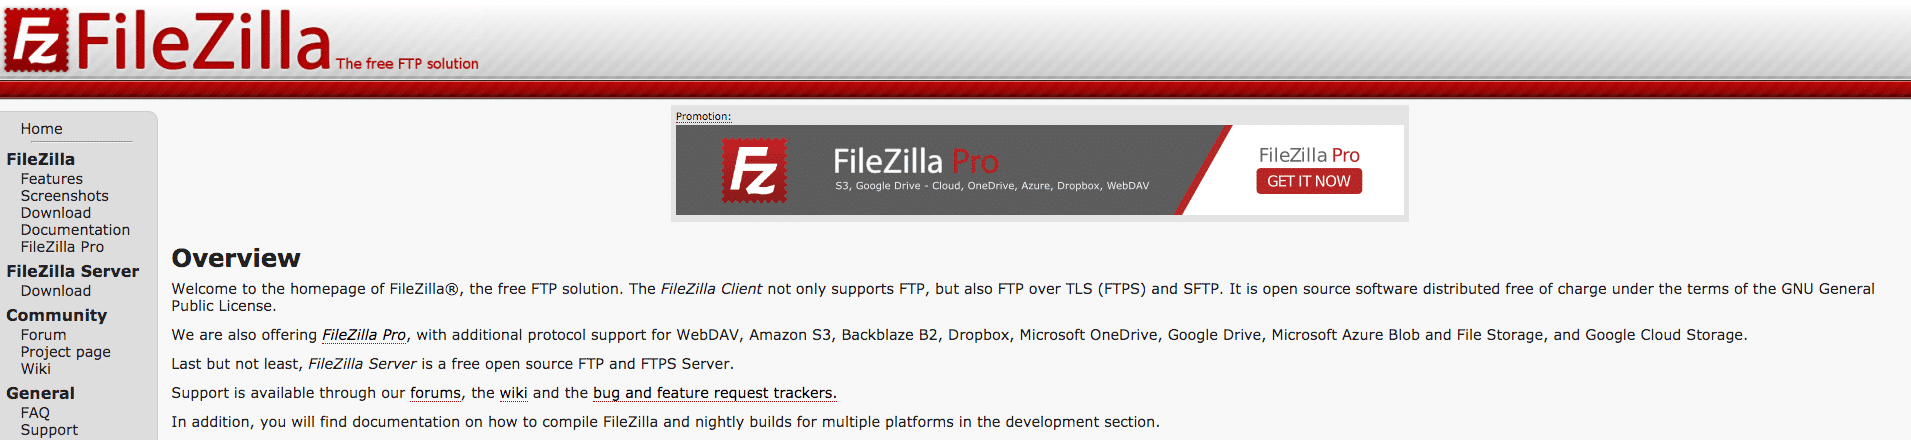 The FileZilla home page